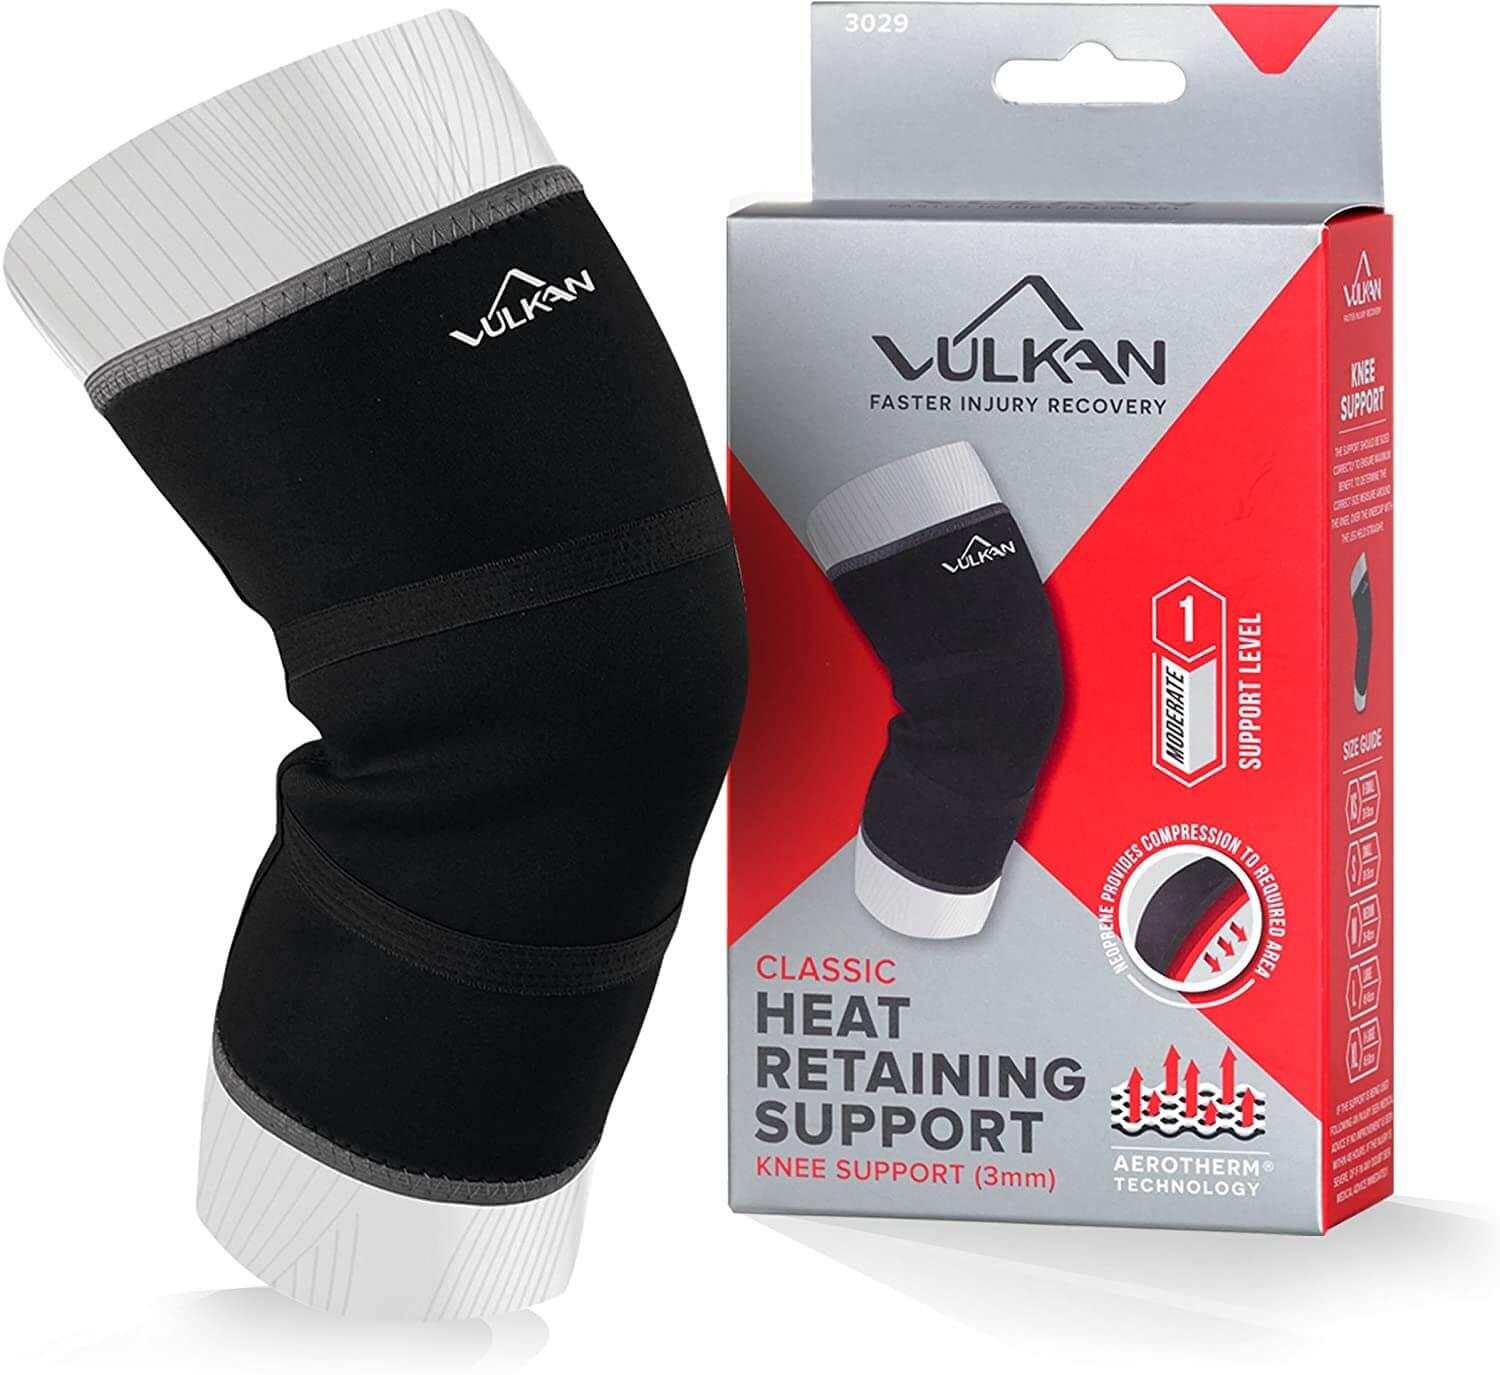 Vulkan Classic Knee Support Brace, 3mm 1/5